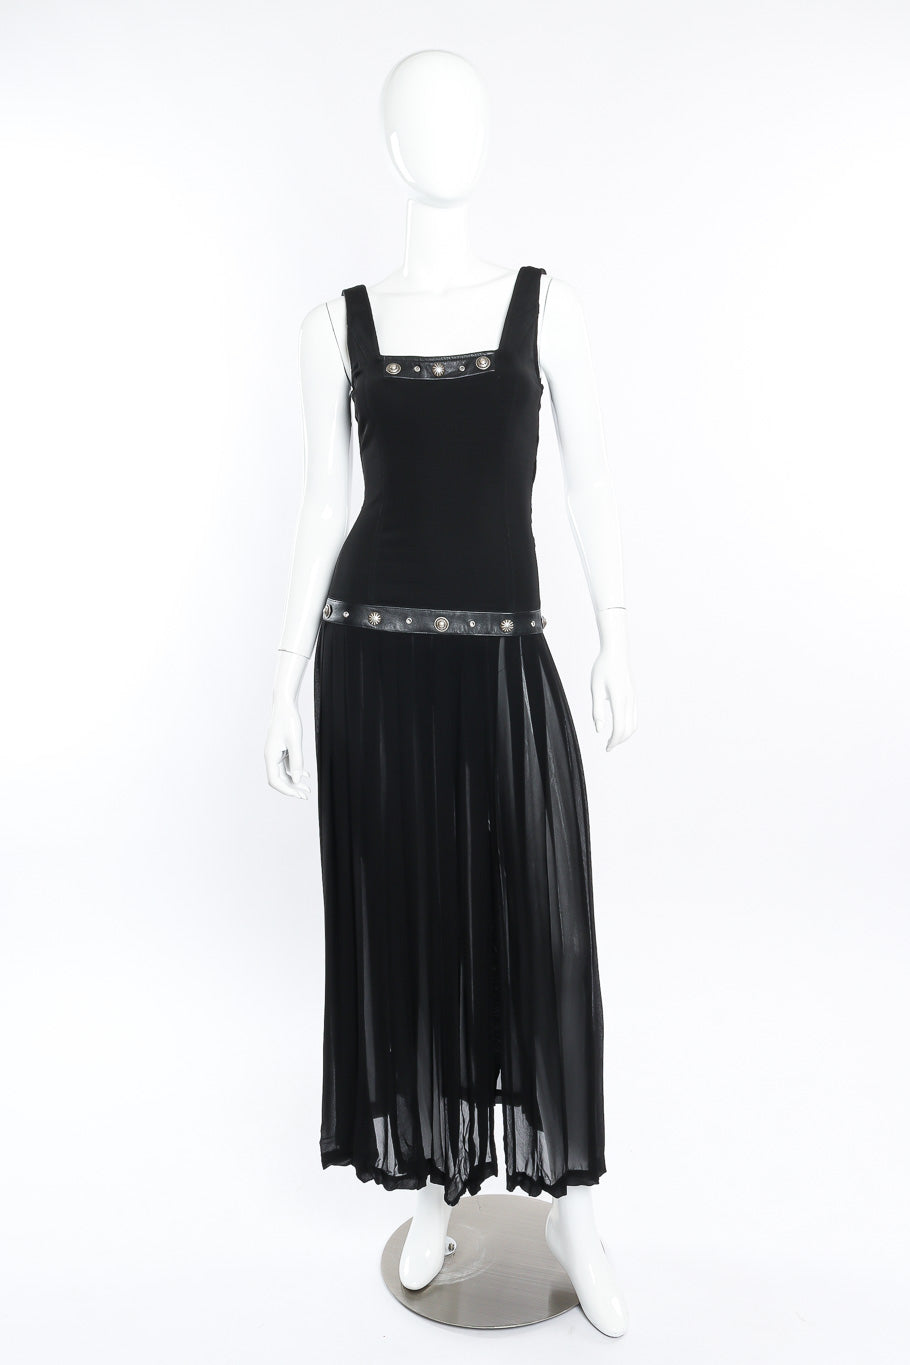 Vintage John Murrough Studded Maxi Dress front view on mannequin @Recessla